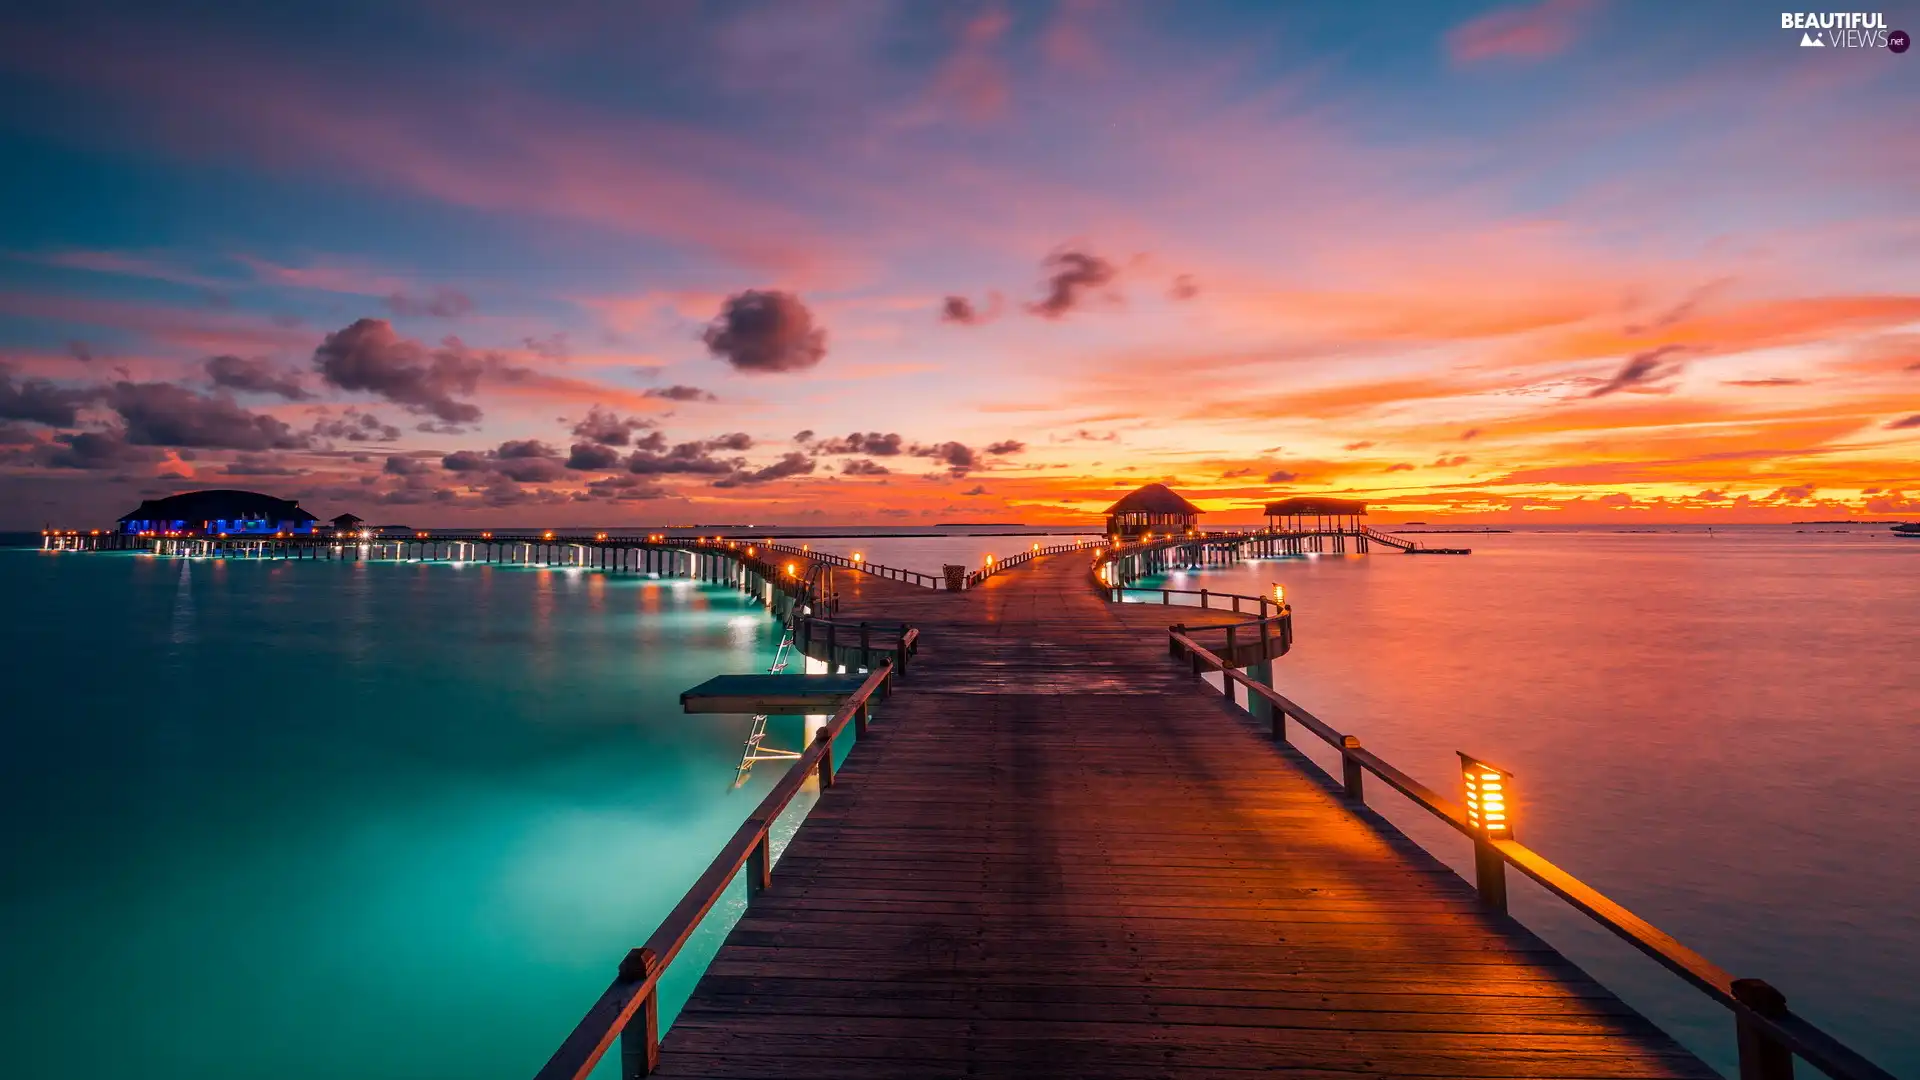 Houses, Maldives, Great Sunsets, Platforms, sea